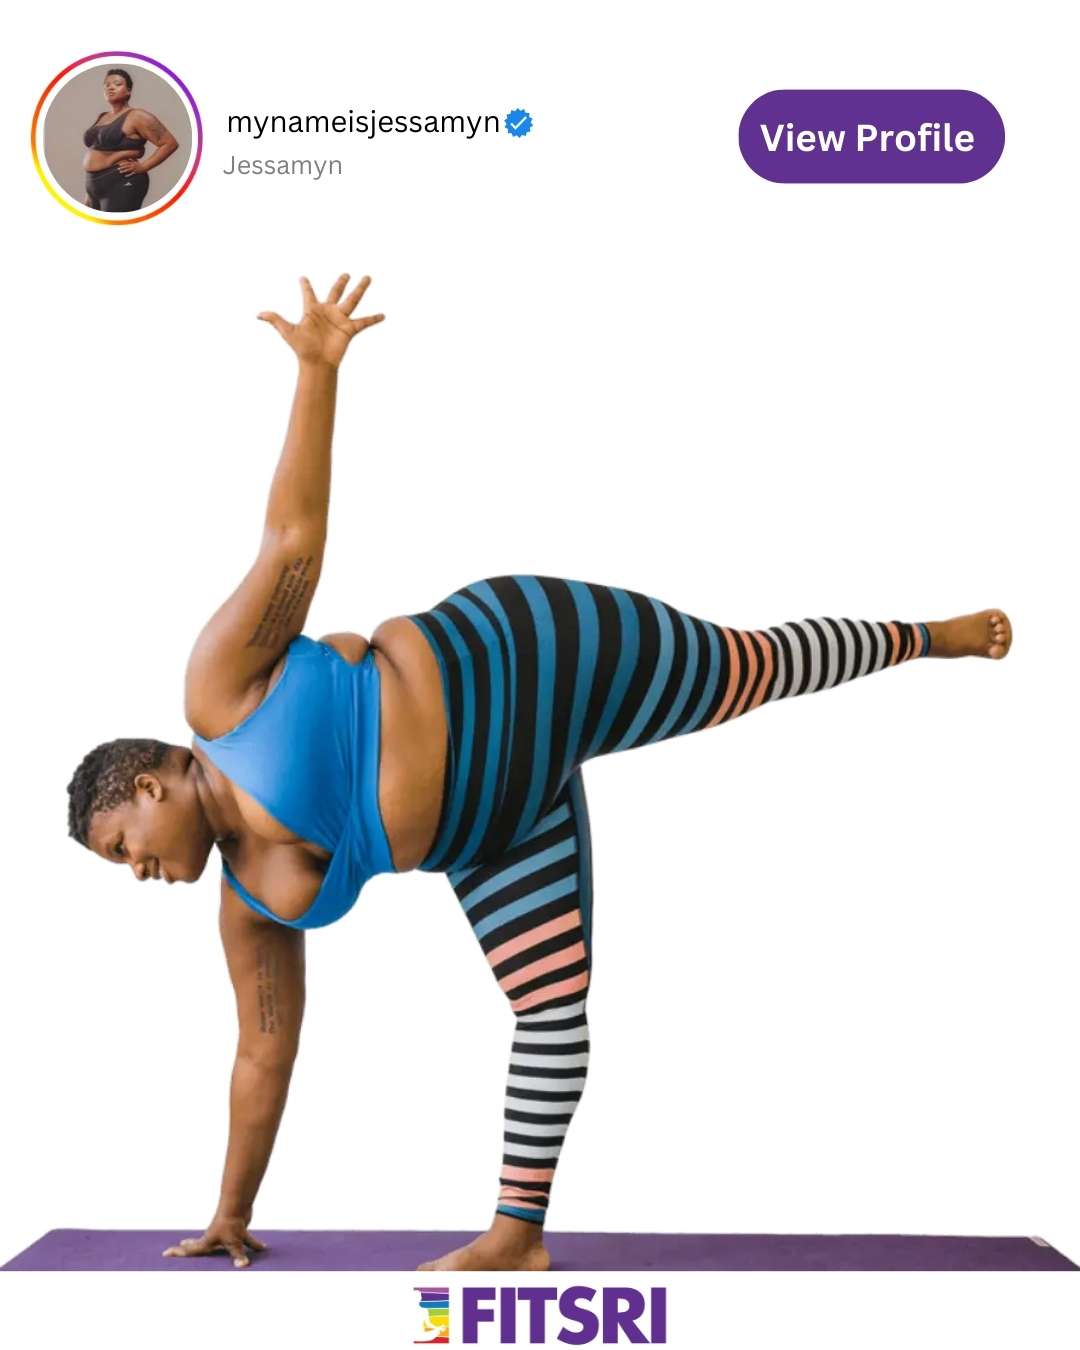 Top 21 Yoga Influencers on Instagram (2023) - Fitsri Yoga